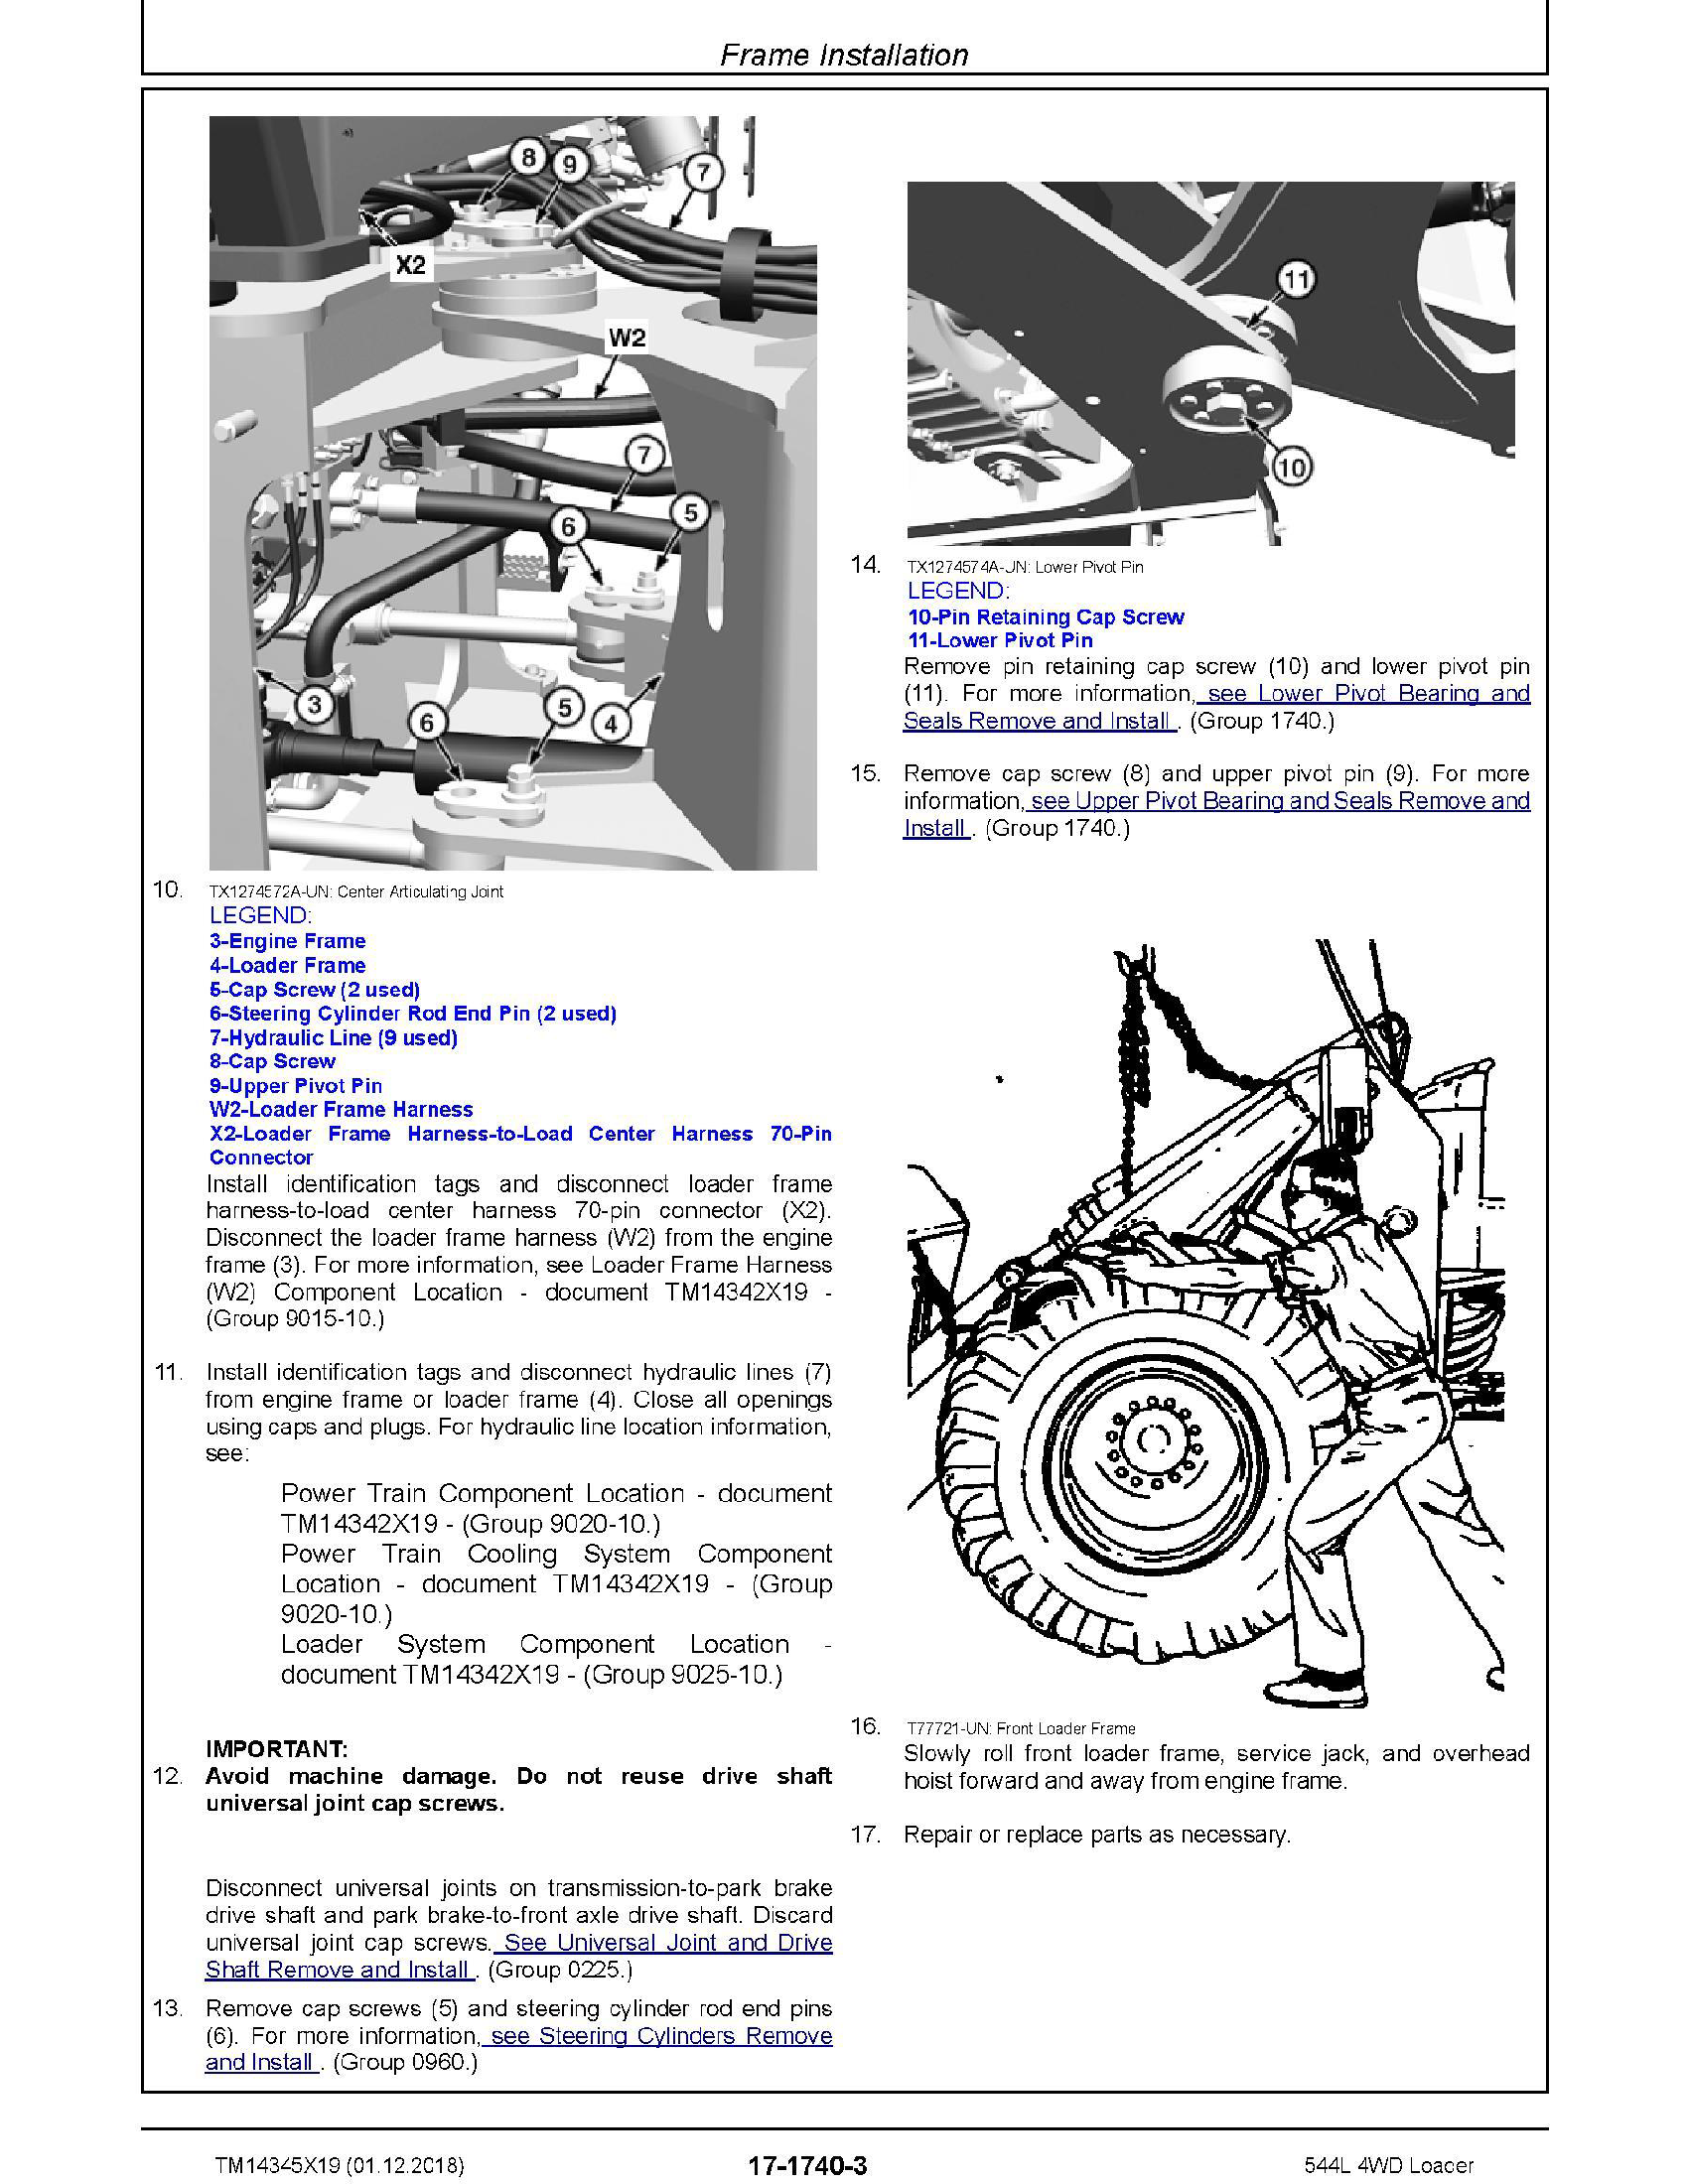 John Deere _F693054������� manual pdf